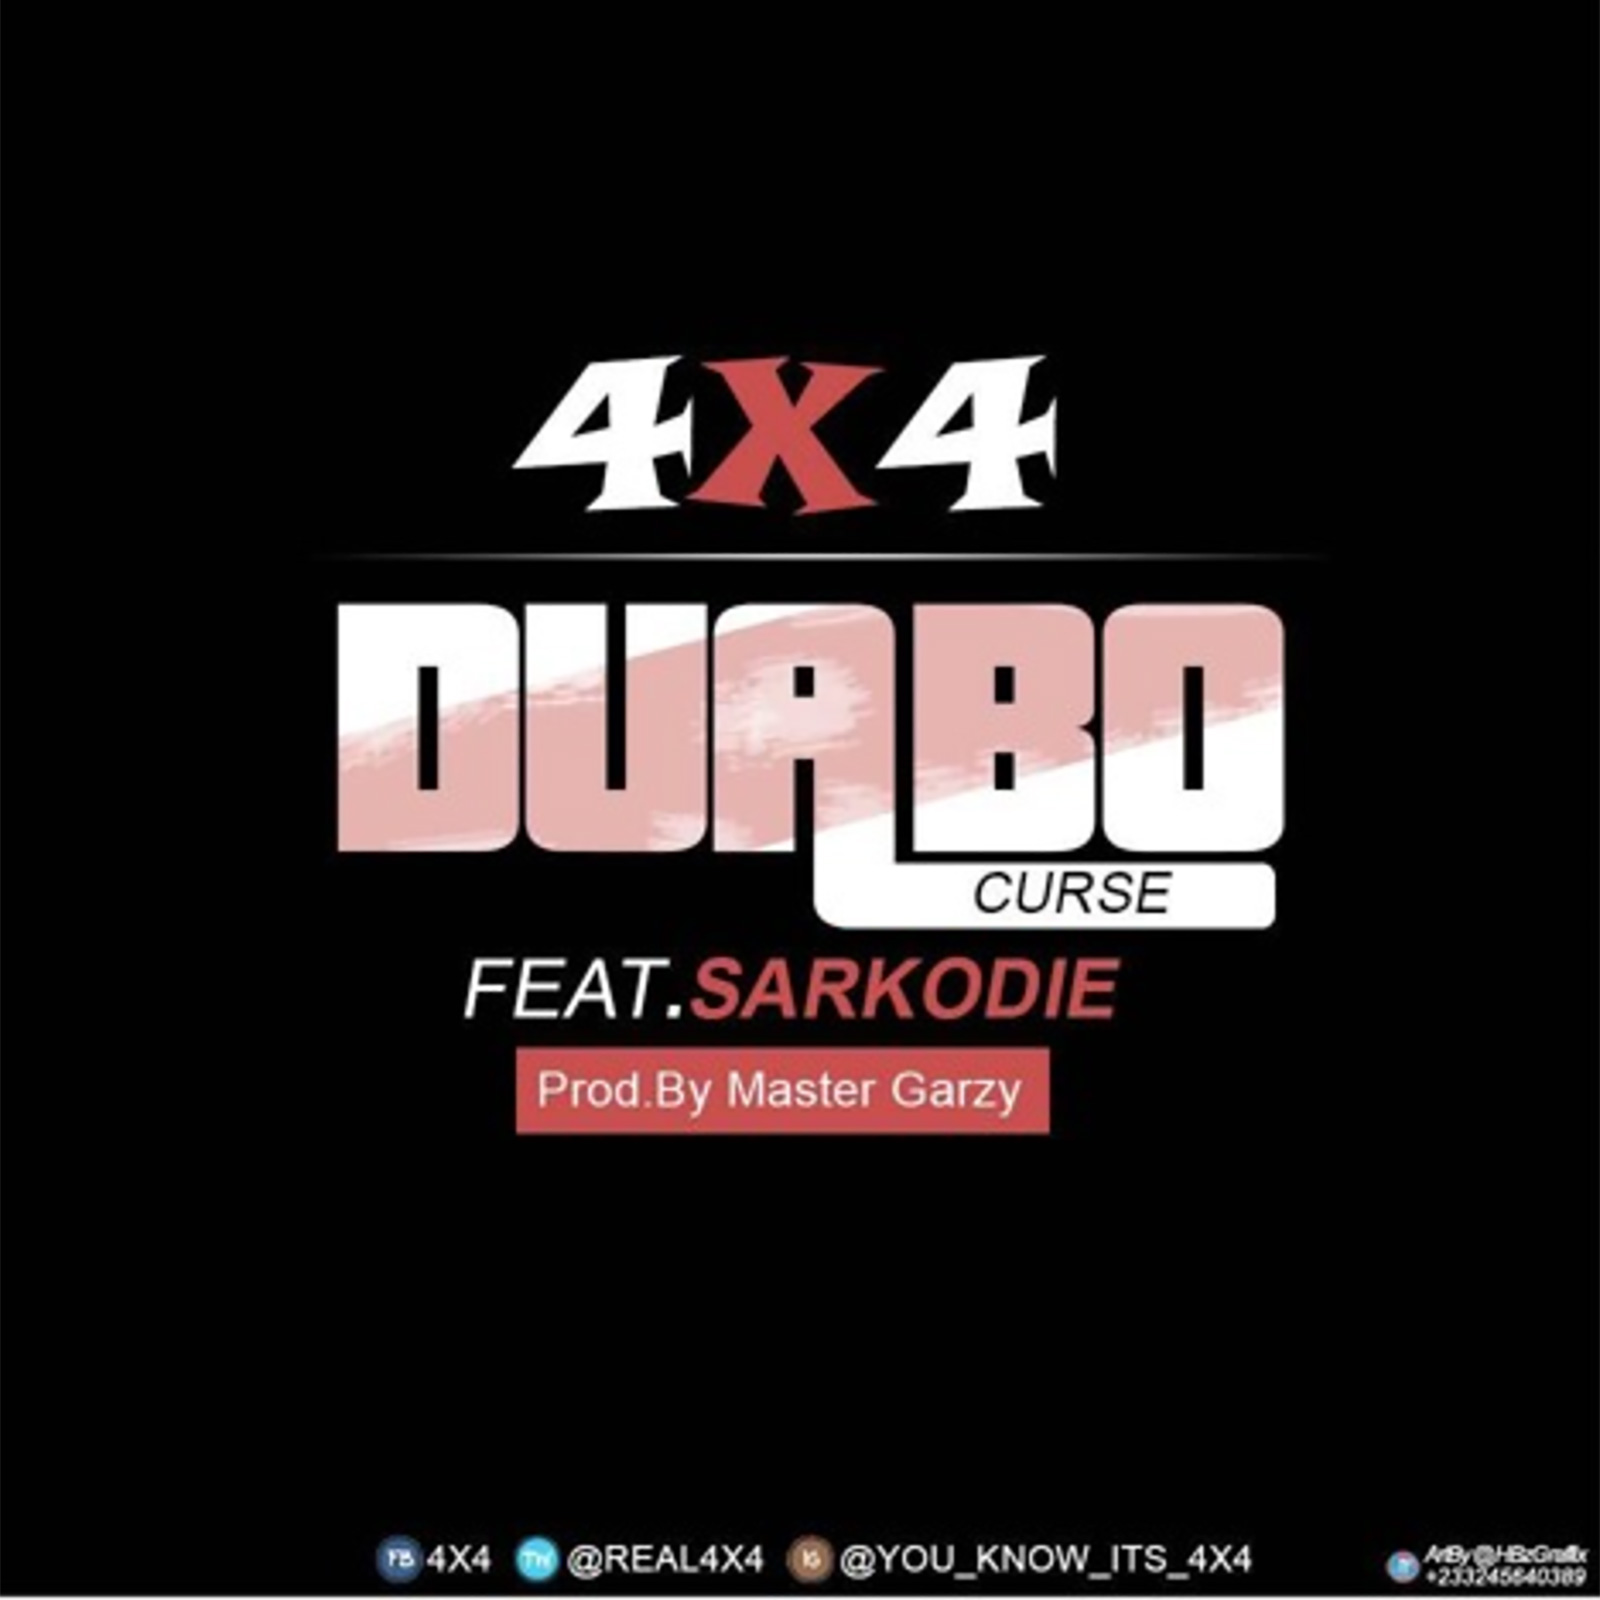 Duabo (Curse) by 4x4 feat. Sarkodie